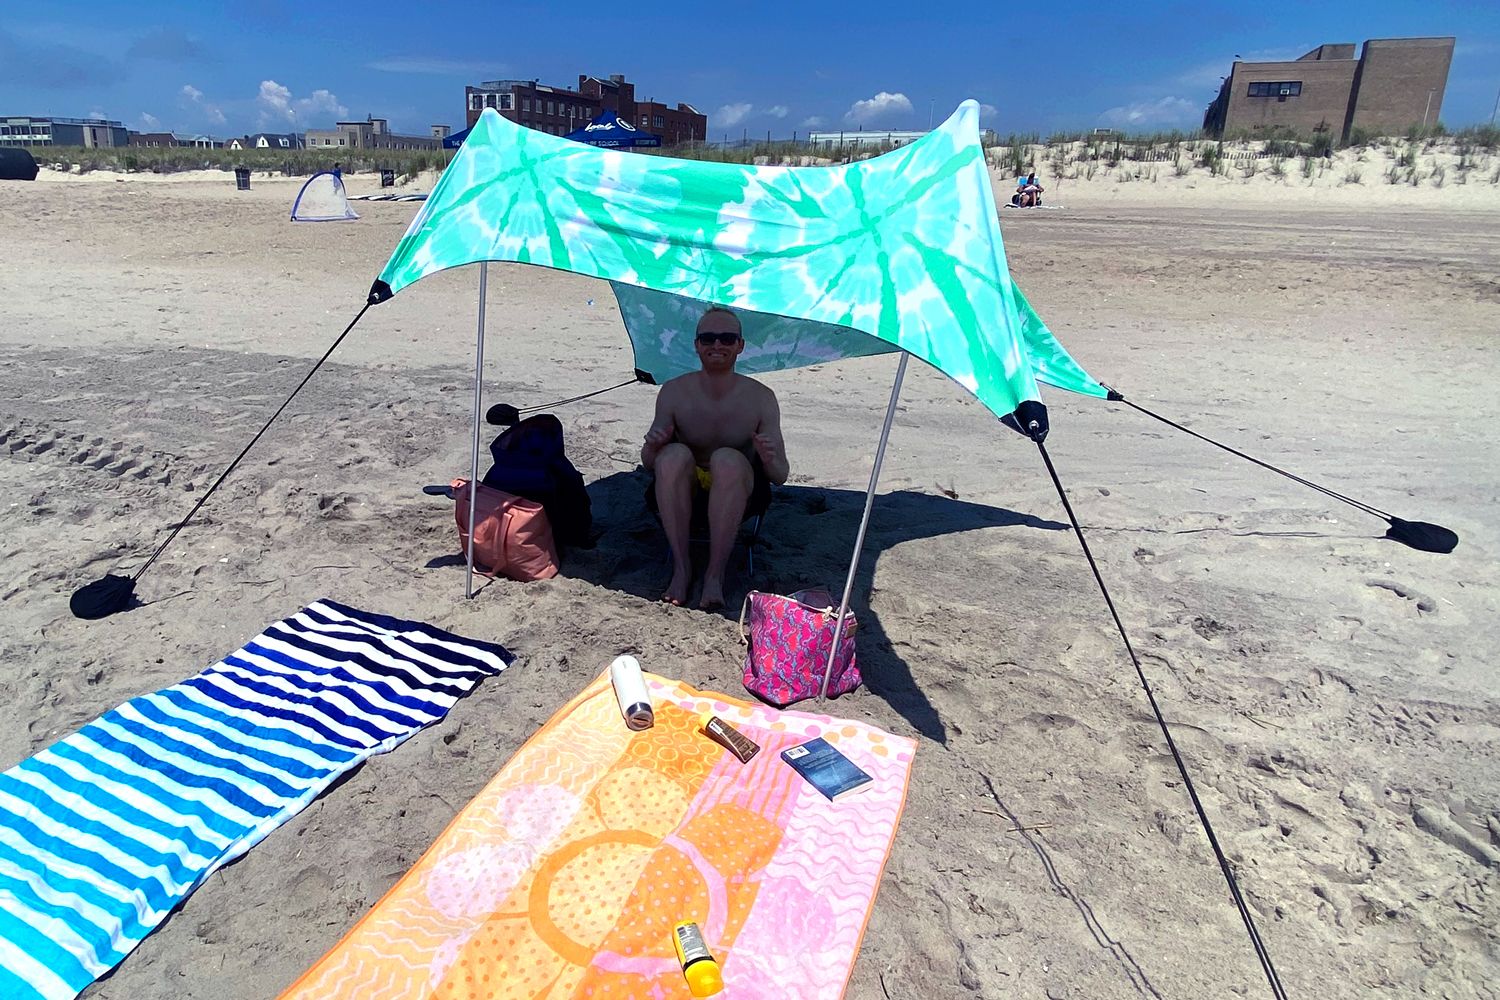 SUN NINJA 8 Person Pop Up Beach Tent Sun Shelter UPF 50+ Protection Shovel  Pegs